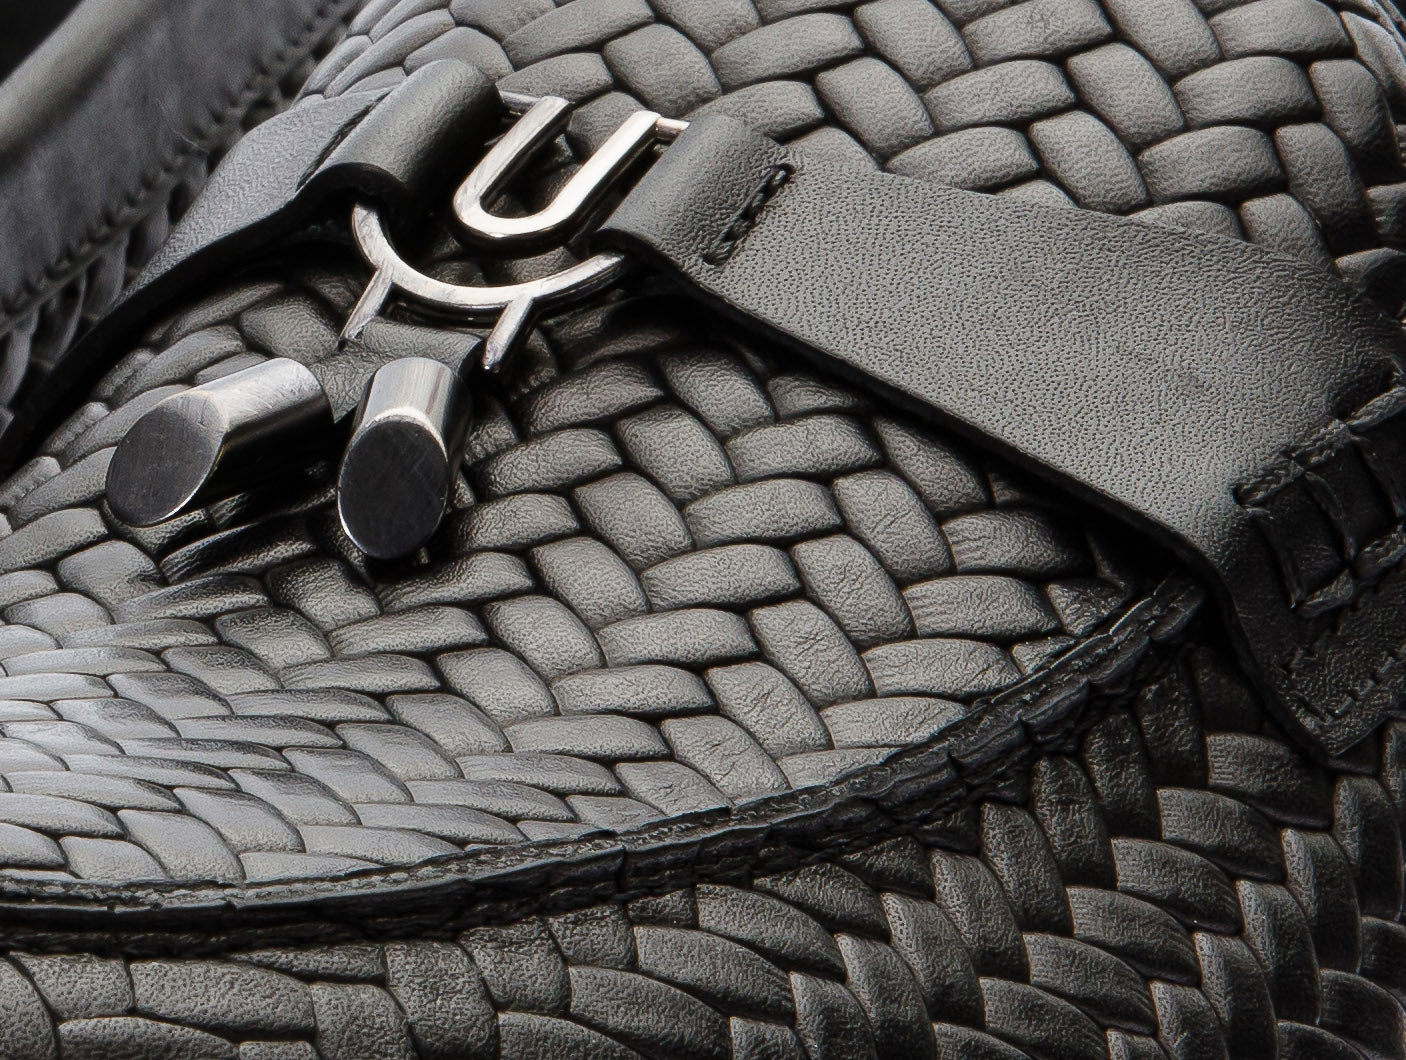 The Sperry Black Leather Tassel Loafer Men Shoe